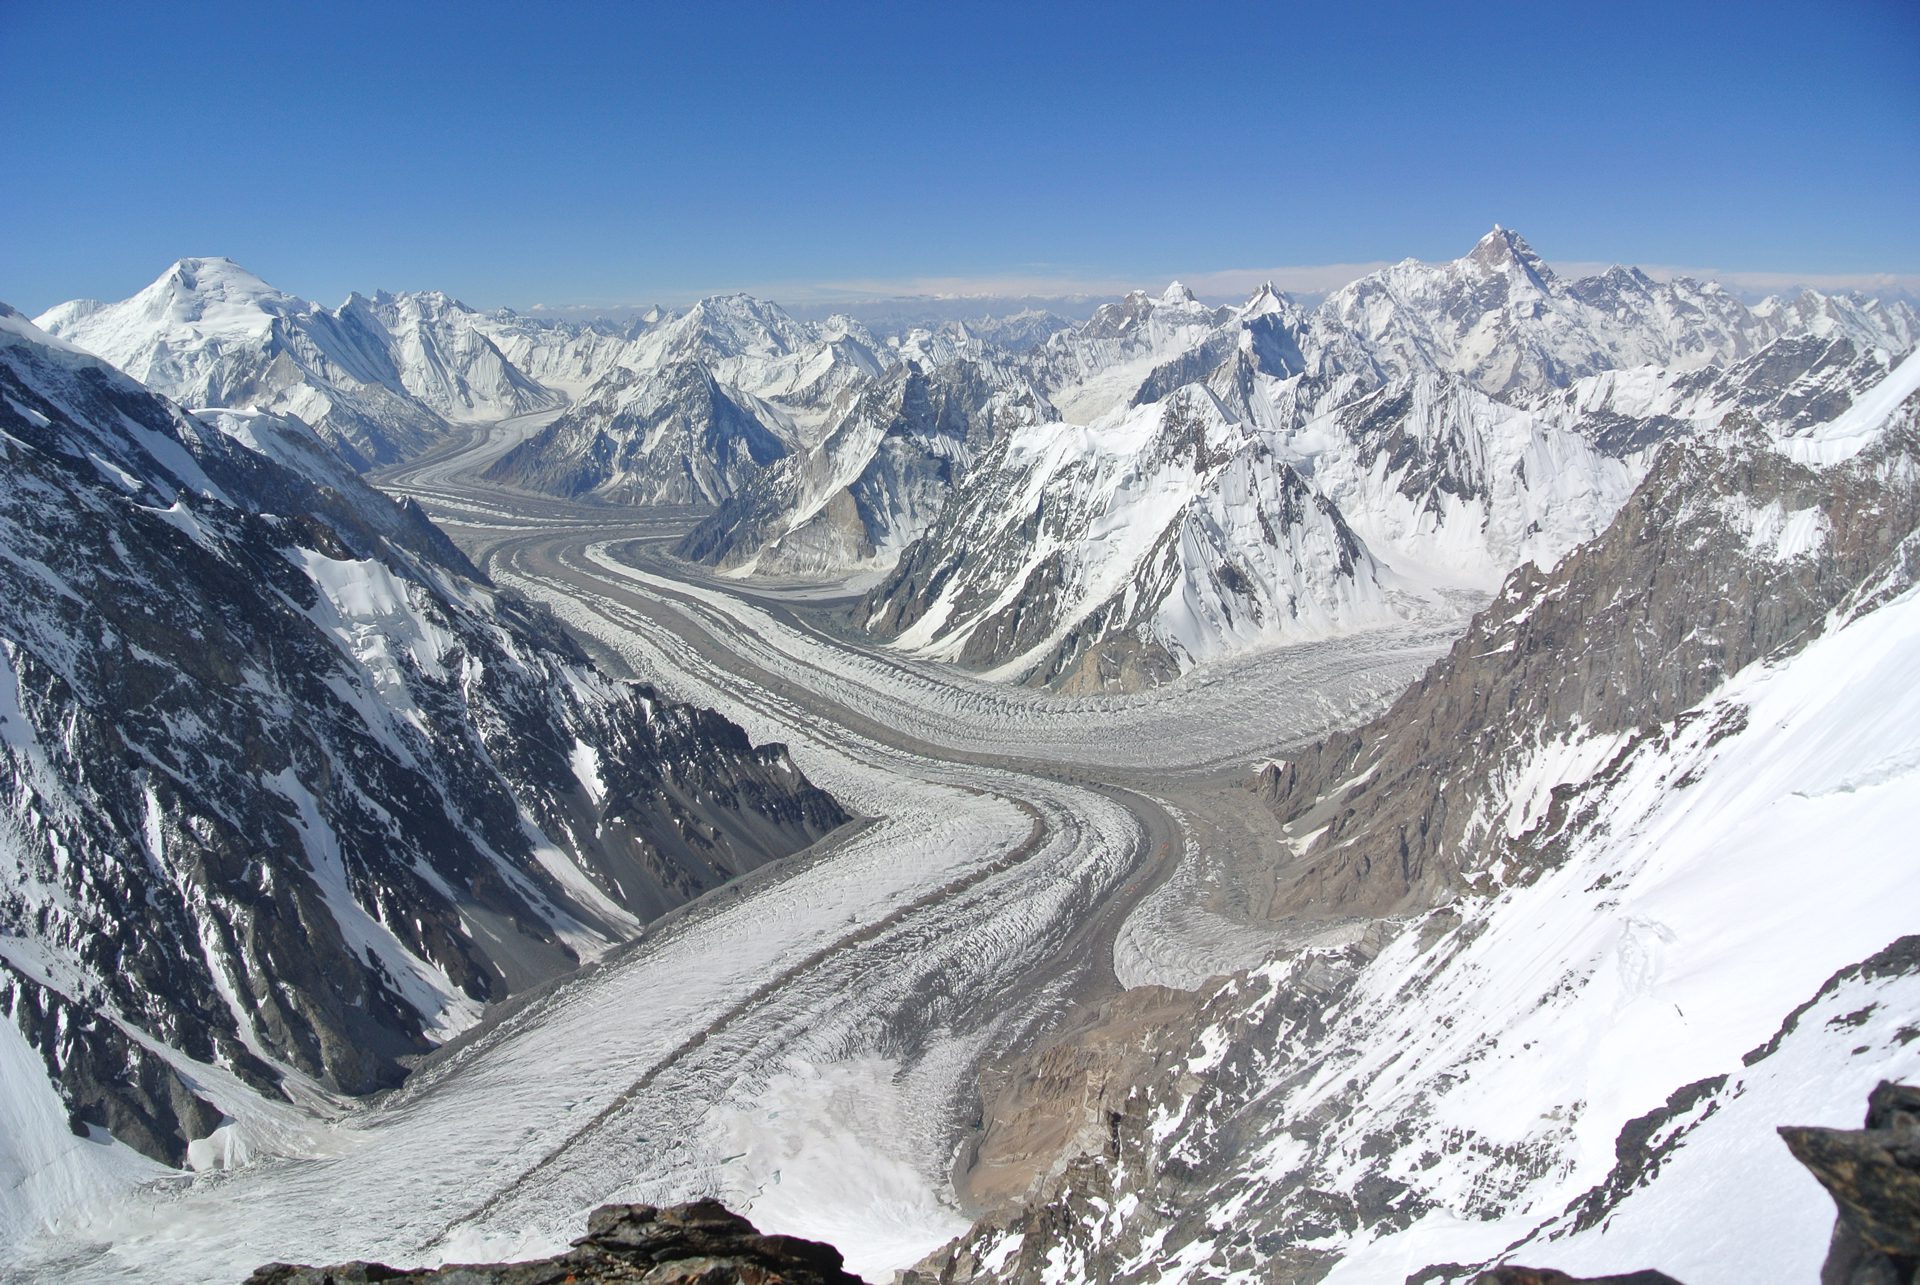 Karakoram Glacier, Pakistan: The beauty of the Karakoram